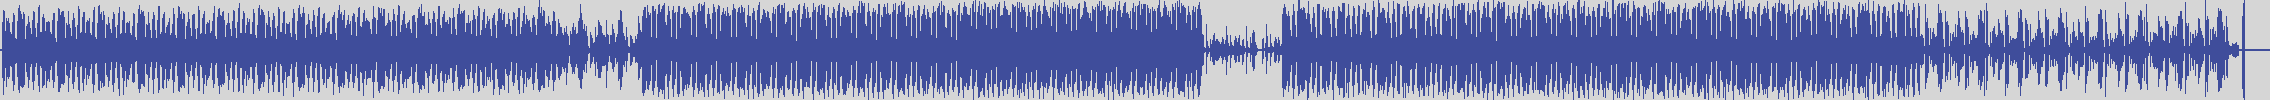 nf_boyz_records [NFY023] Pluton 55 - Movin Movin! [Exp.] audio wave form